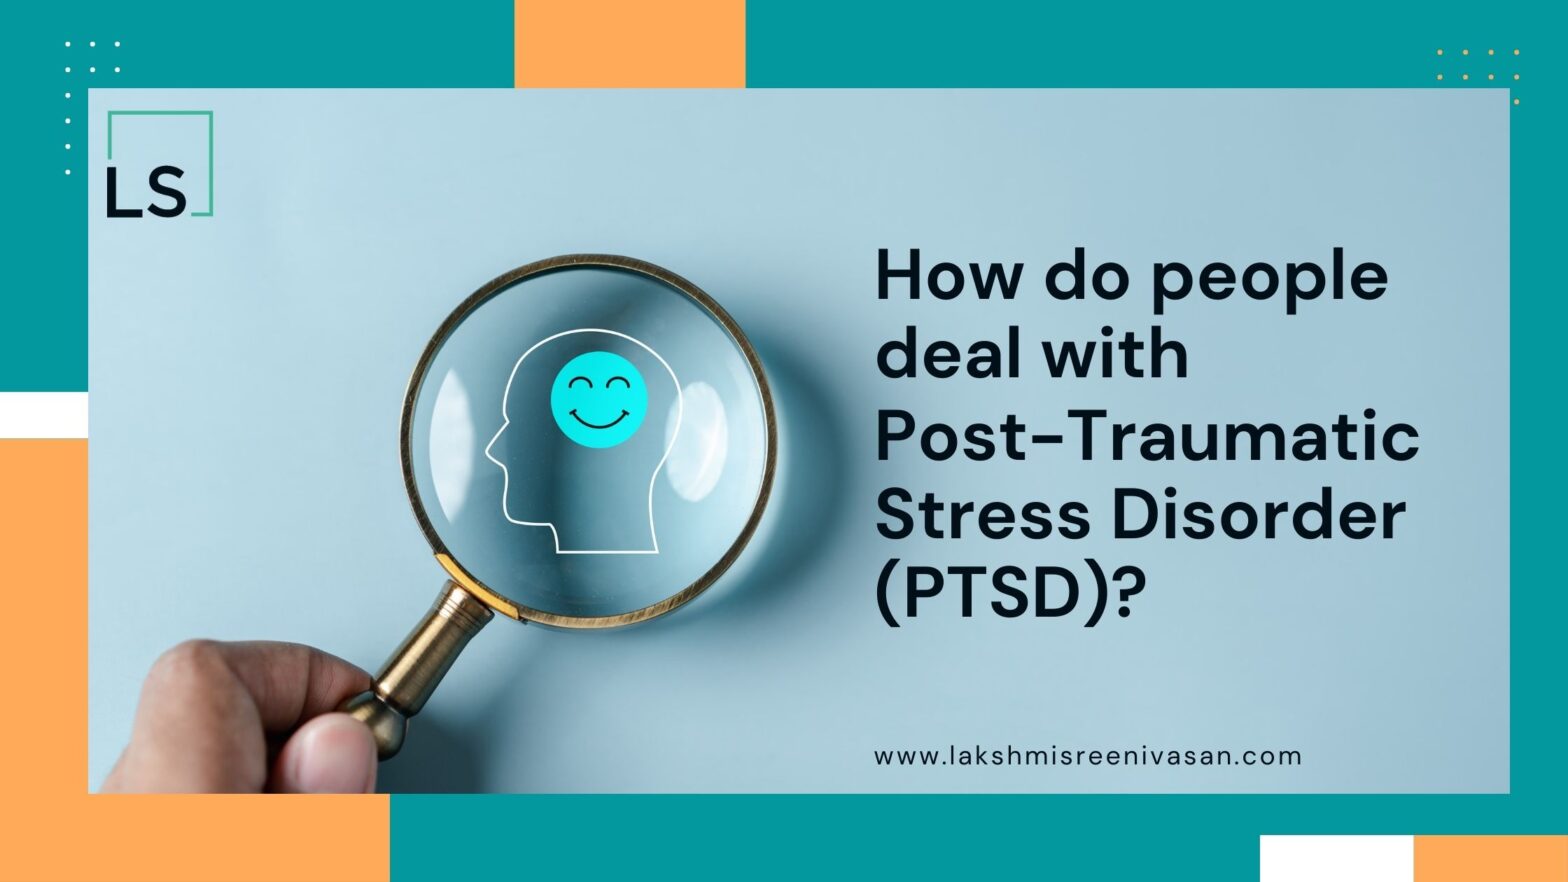 Post-Traumatic Stress Disorder PTSD